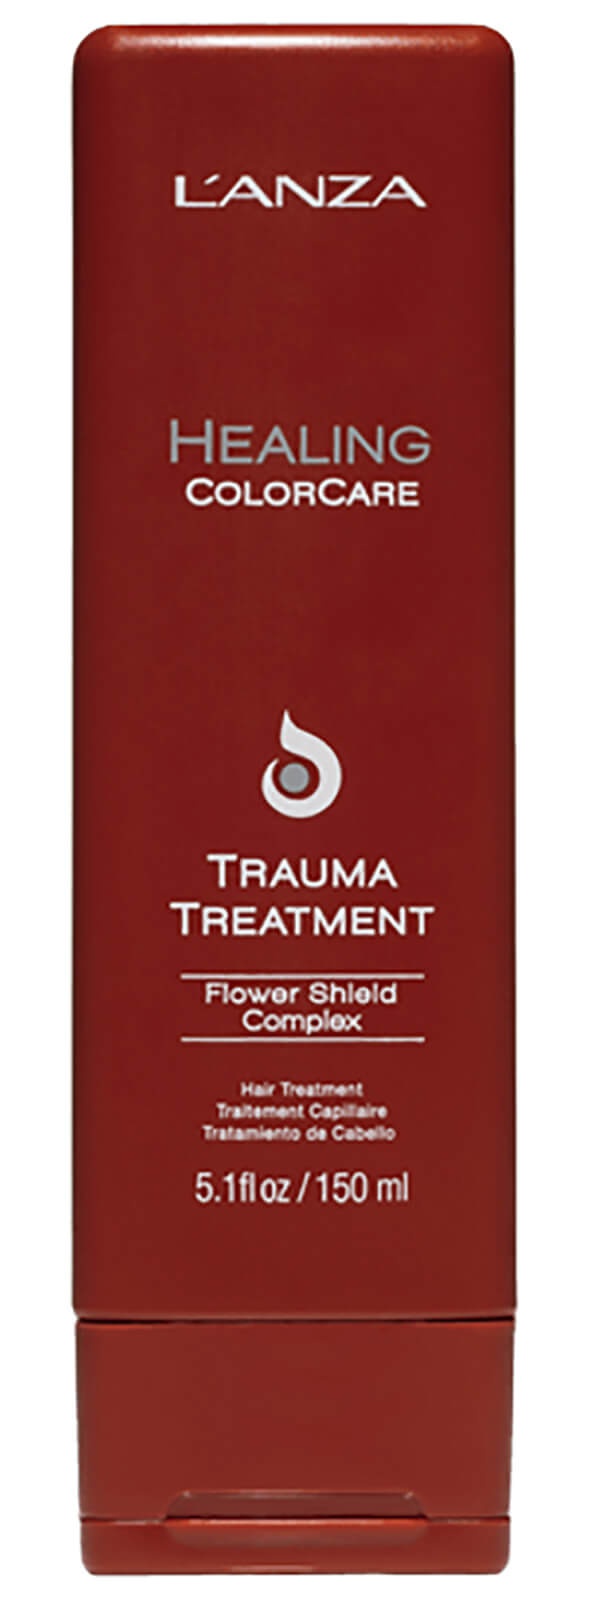 L’anza Healing Colorcare Trauma Treatment